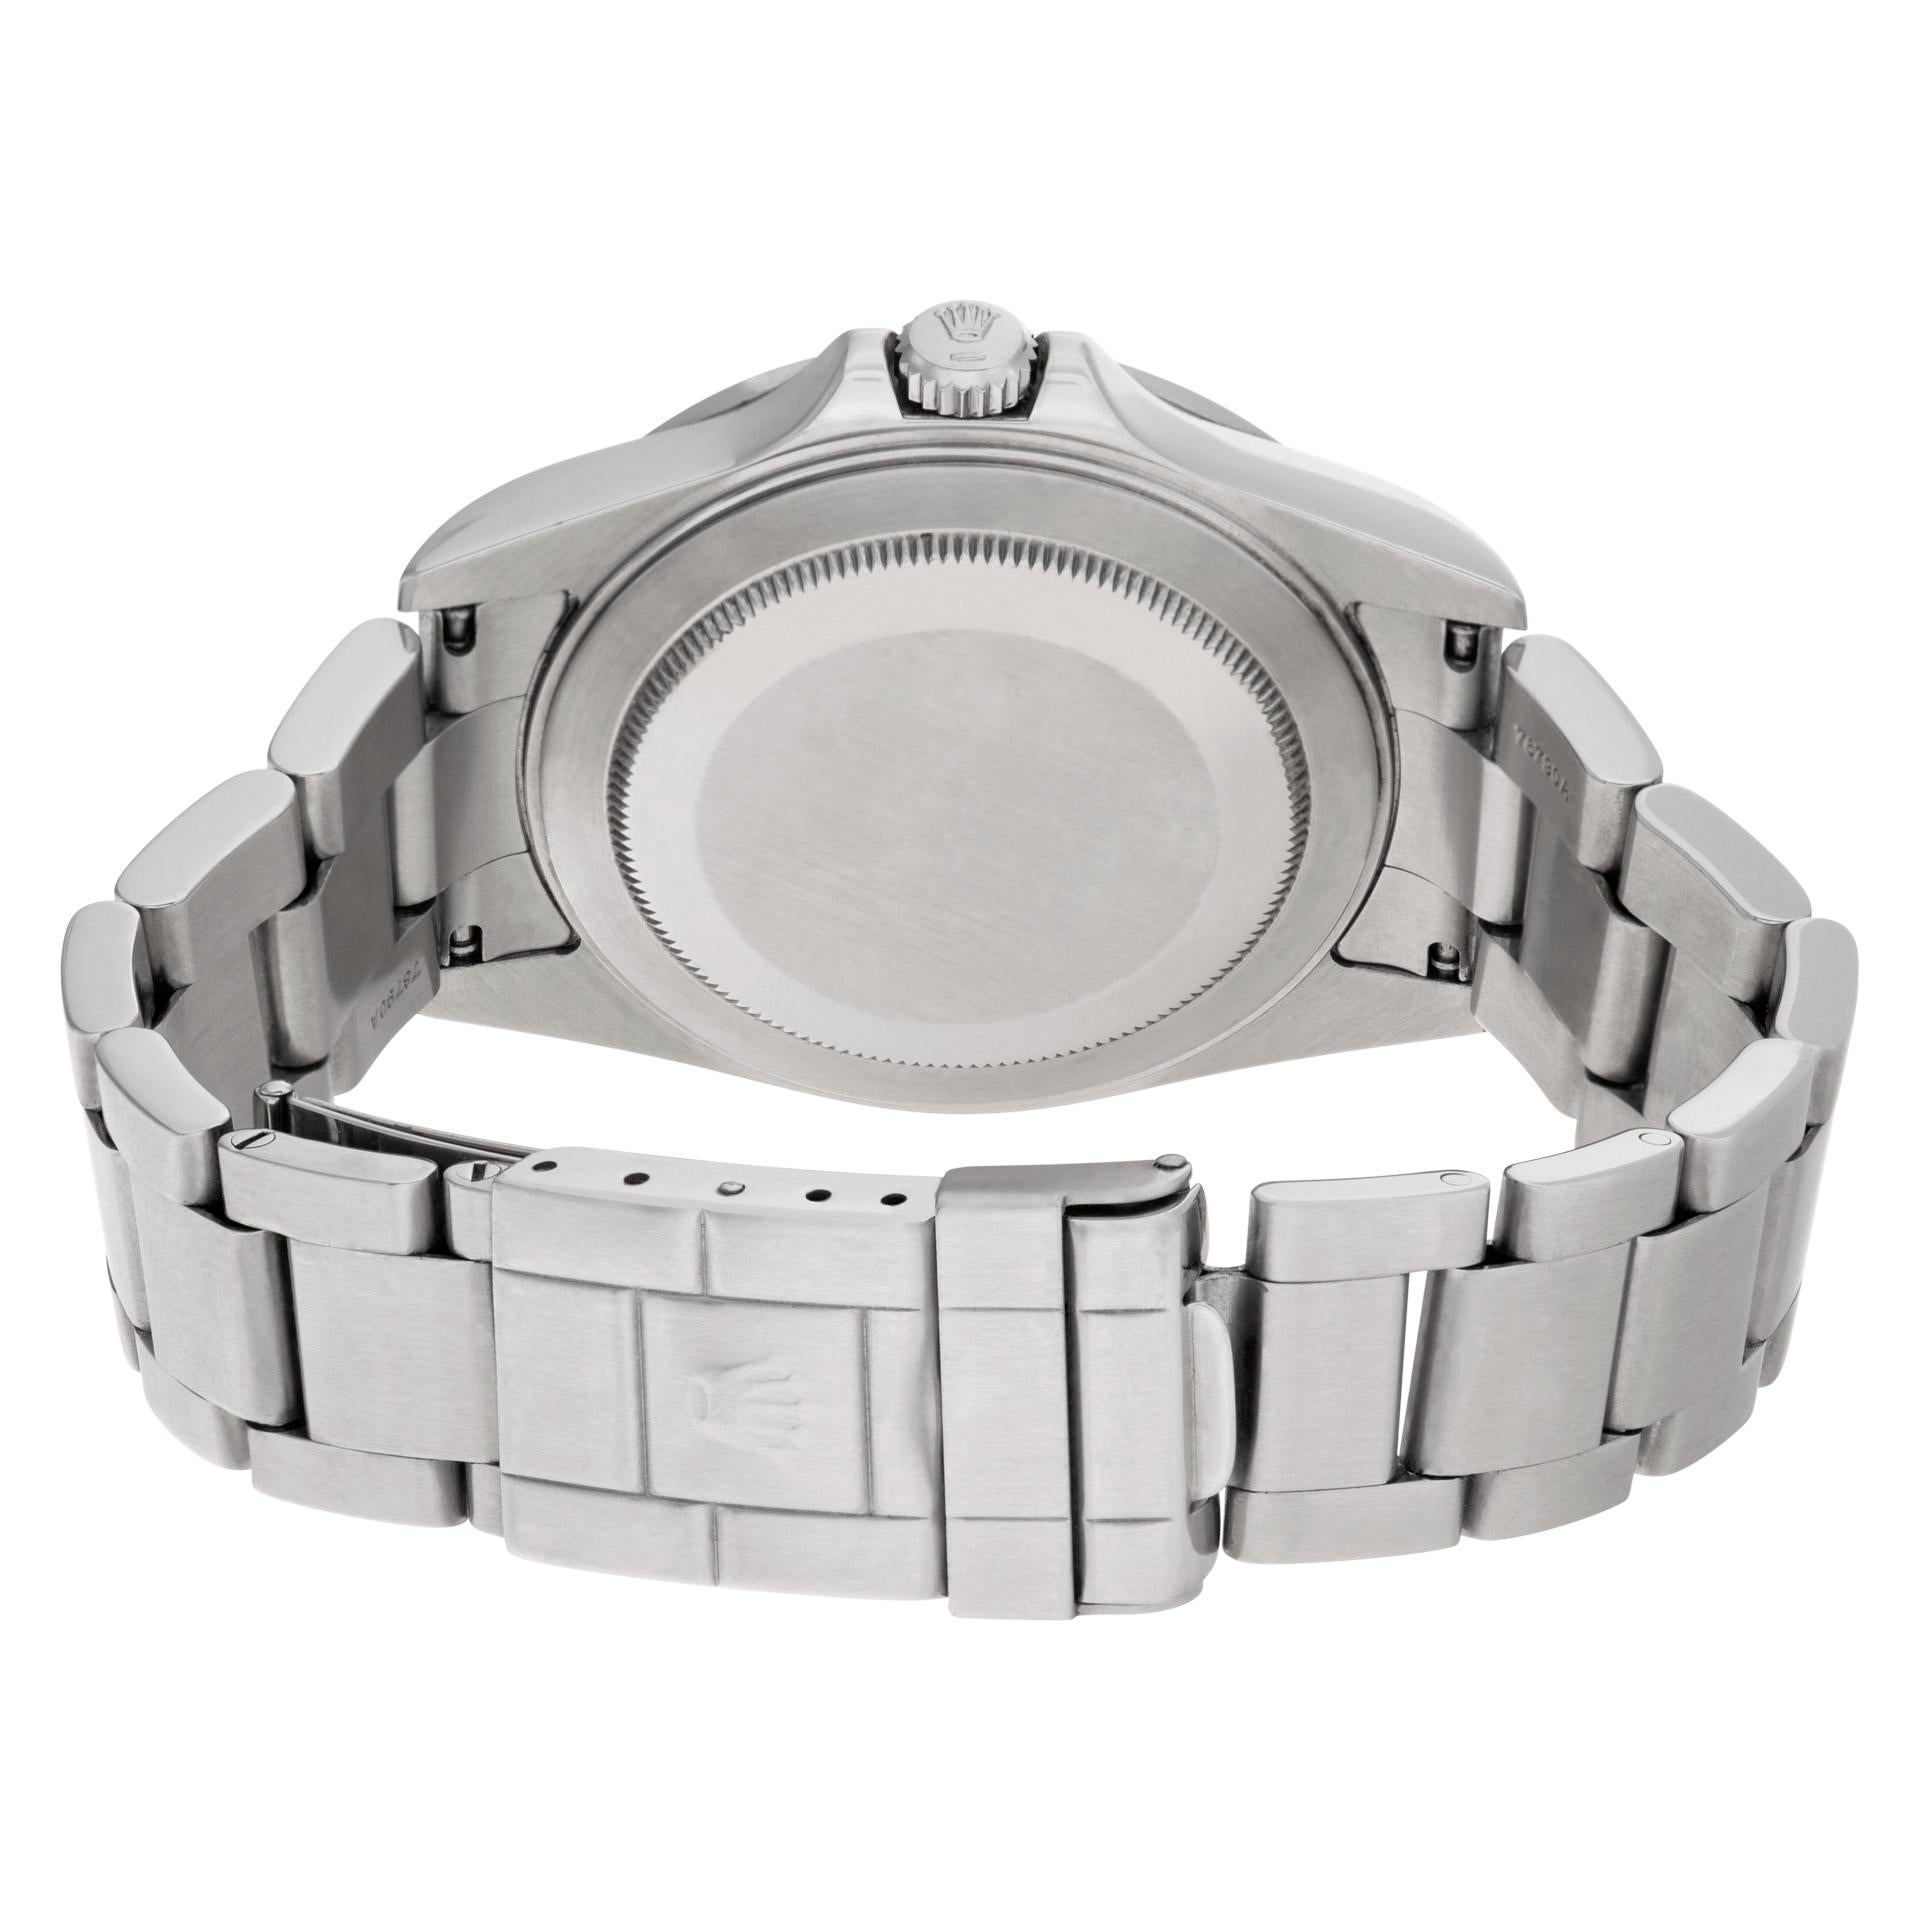 Men's Rolex Explorer II stainless steel Automatic Wristwatch Ref 16570